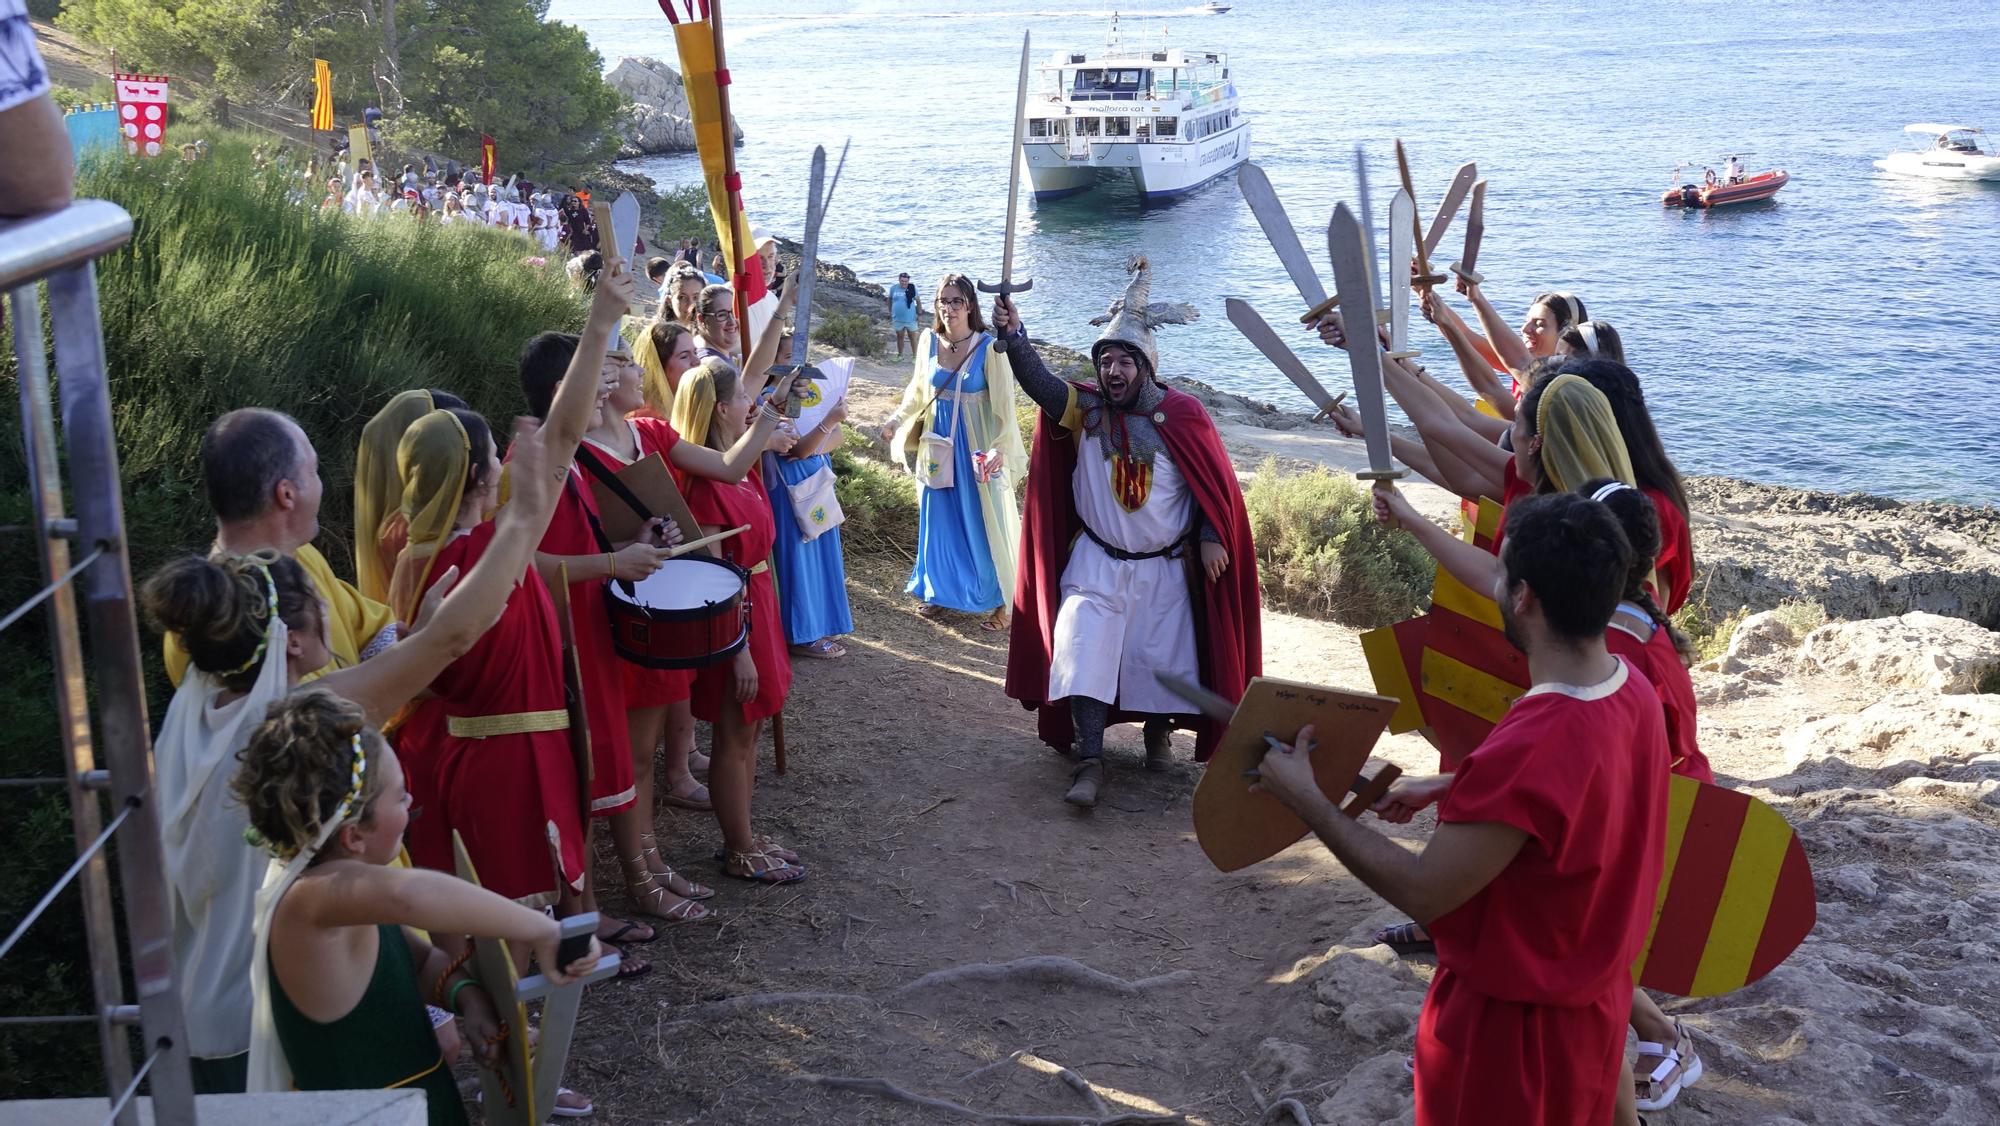 Batalla multitudinaria y festiva en la playa de Santa Ponça